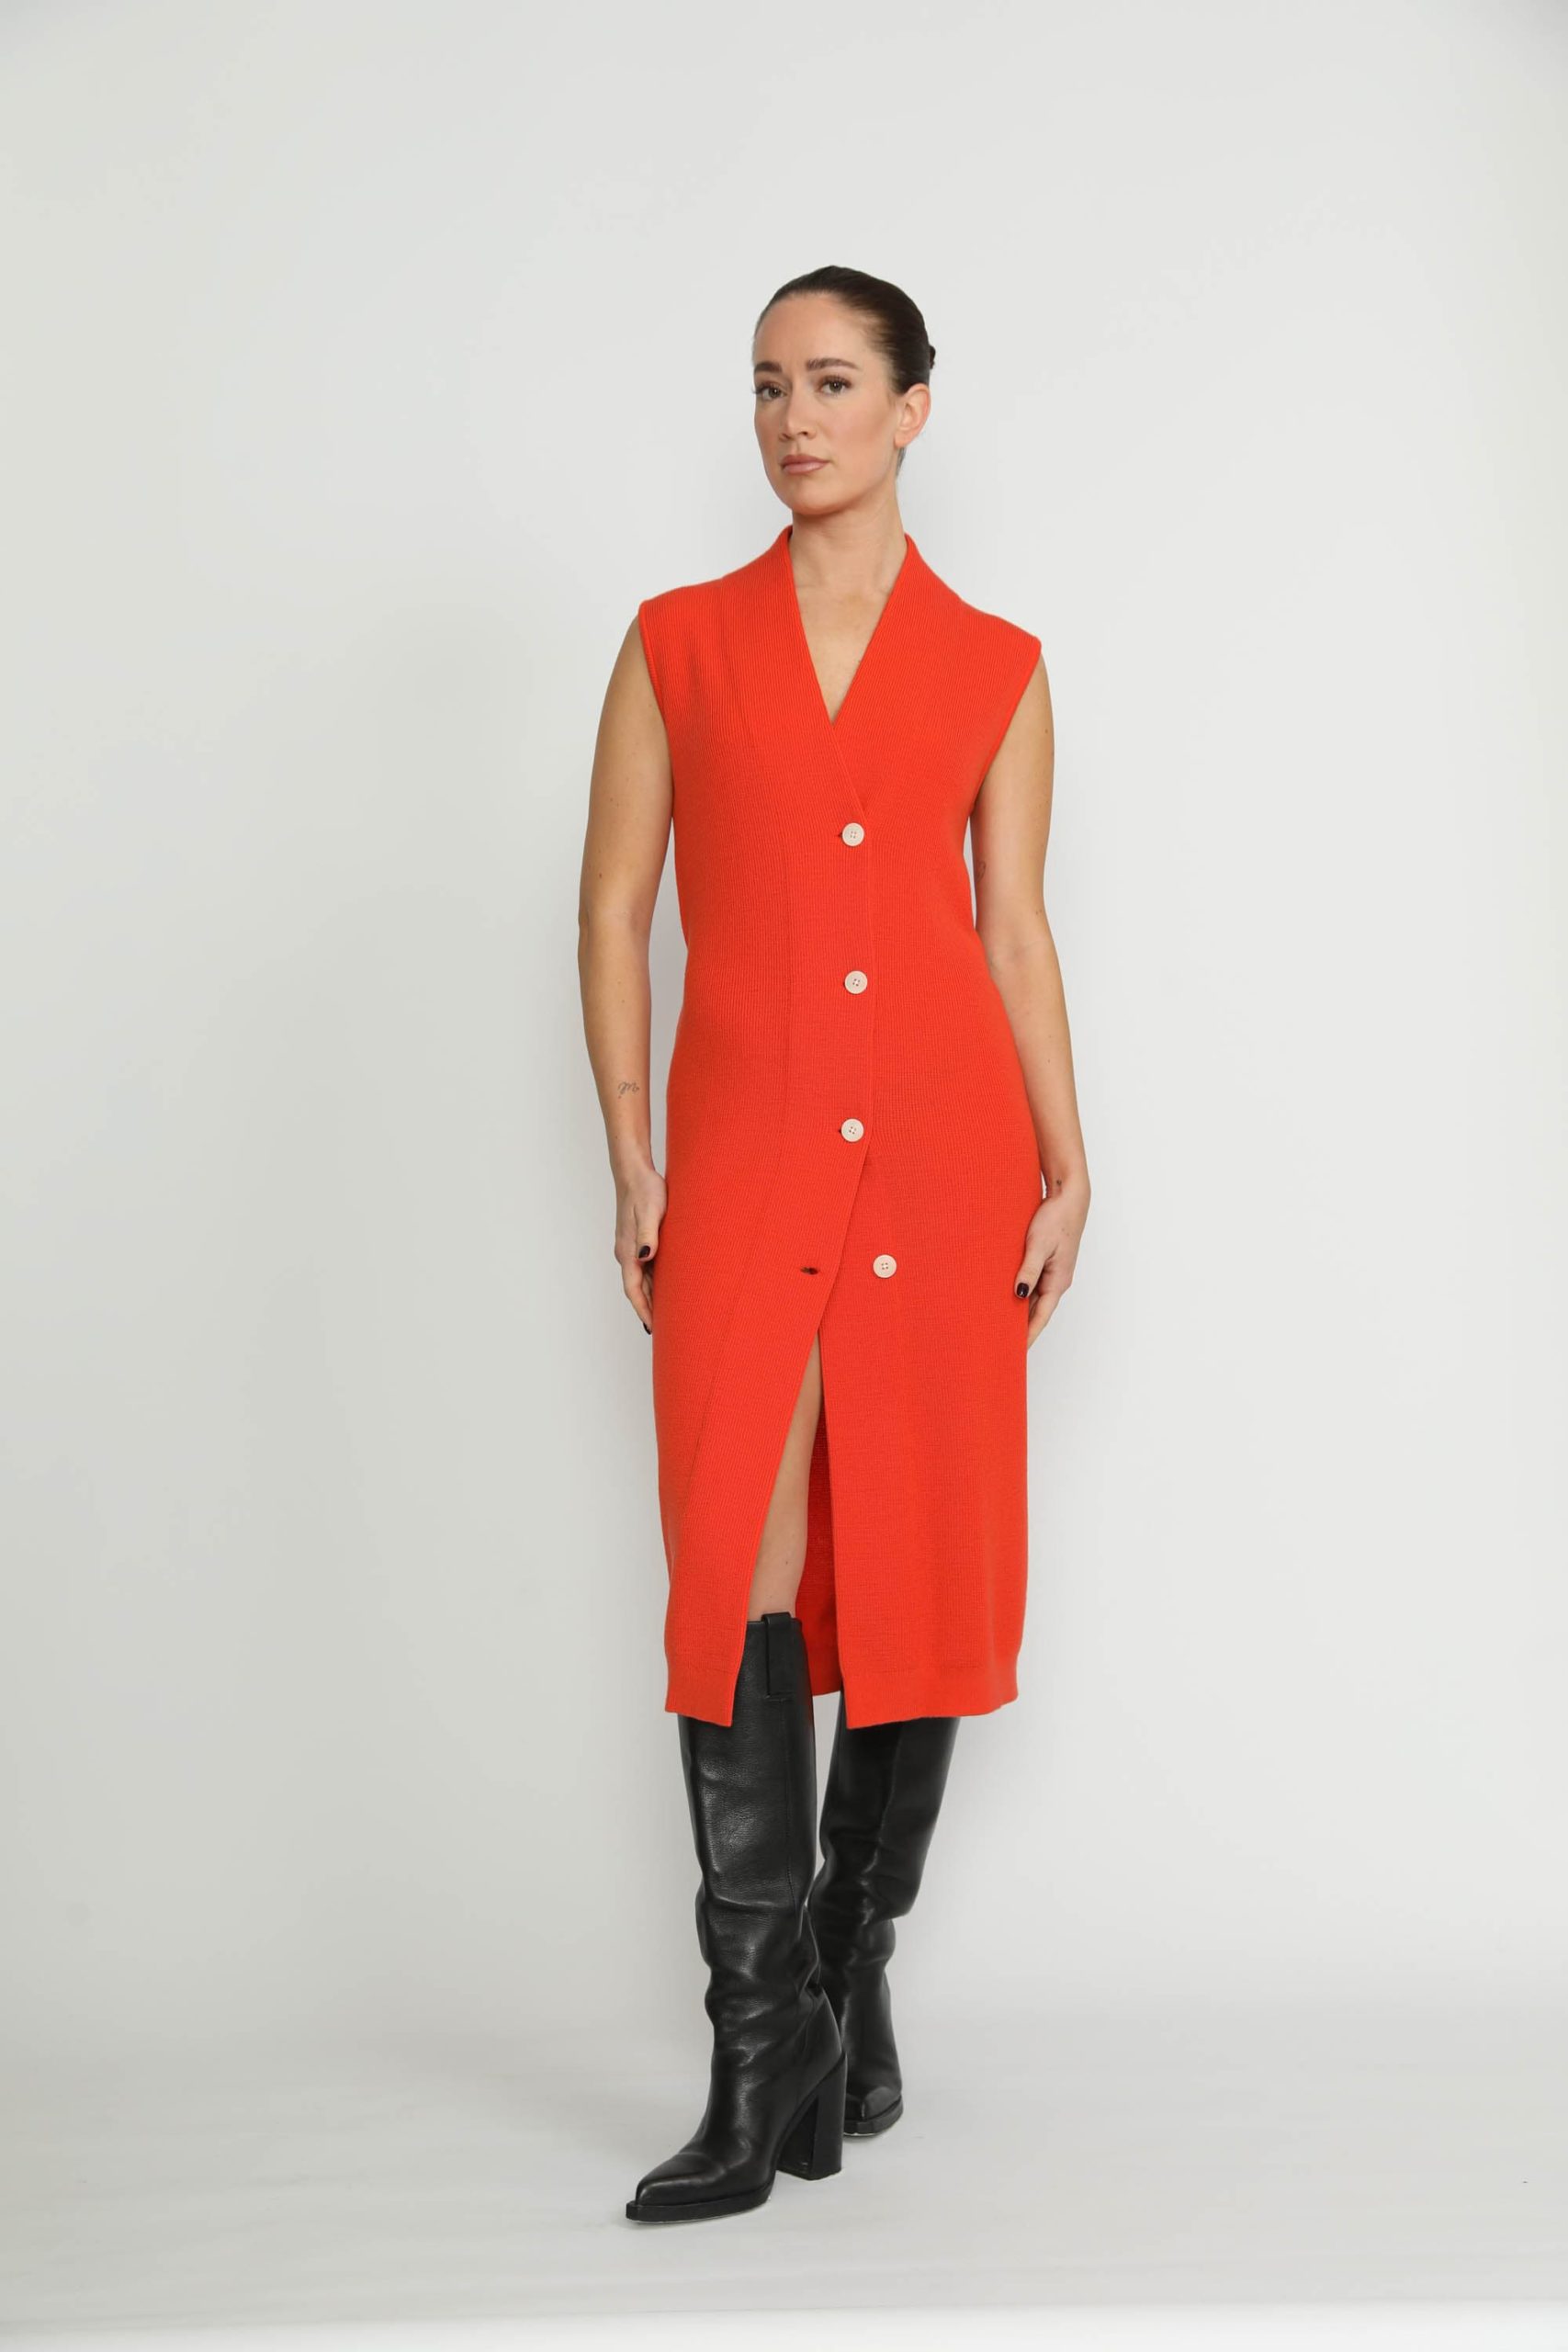 Arlesheim Dress – Arlesheim Orange Knit Dress0